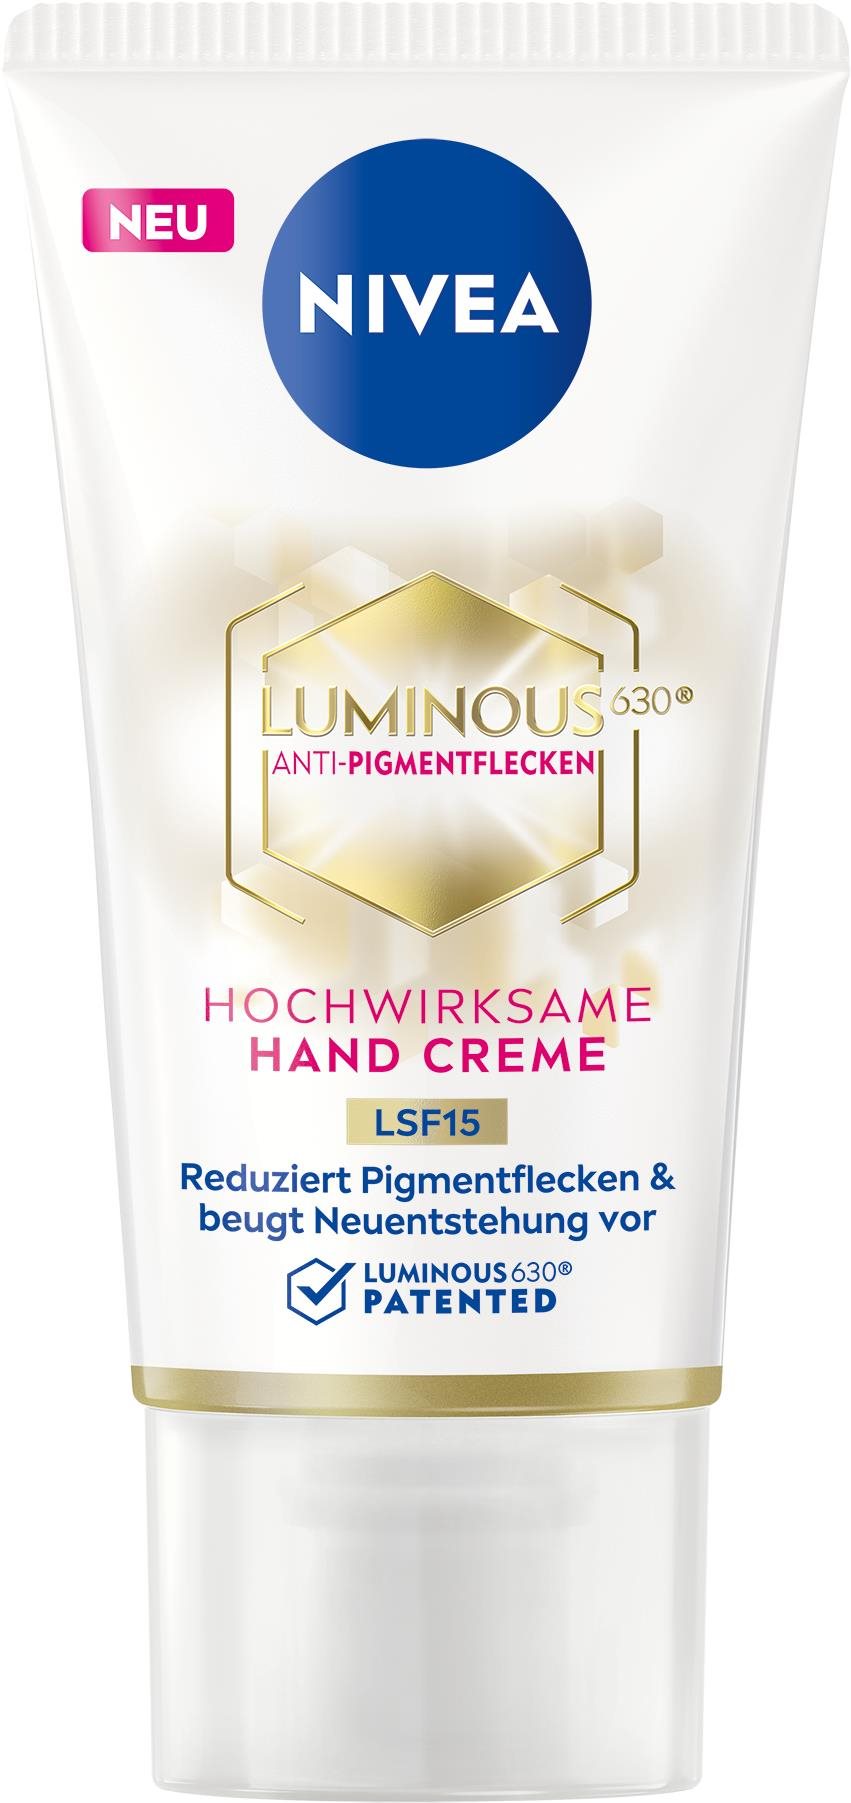 NIVEA Luminous 630 Anti-spots hand creme 50 ml